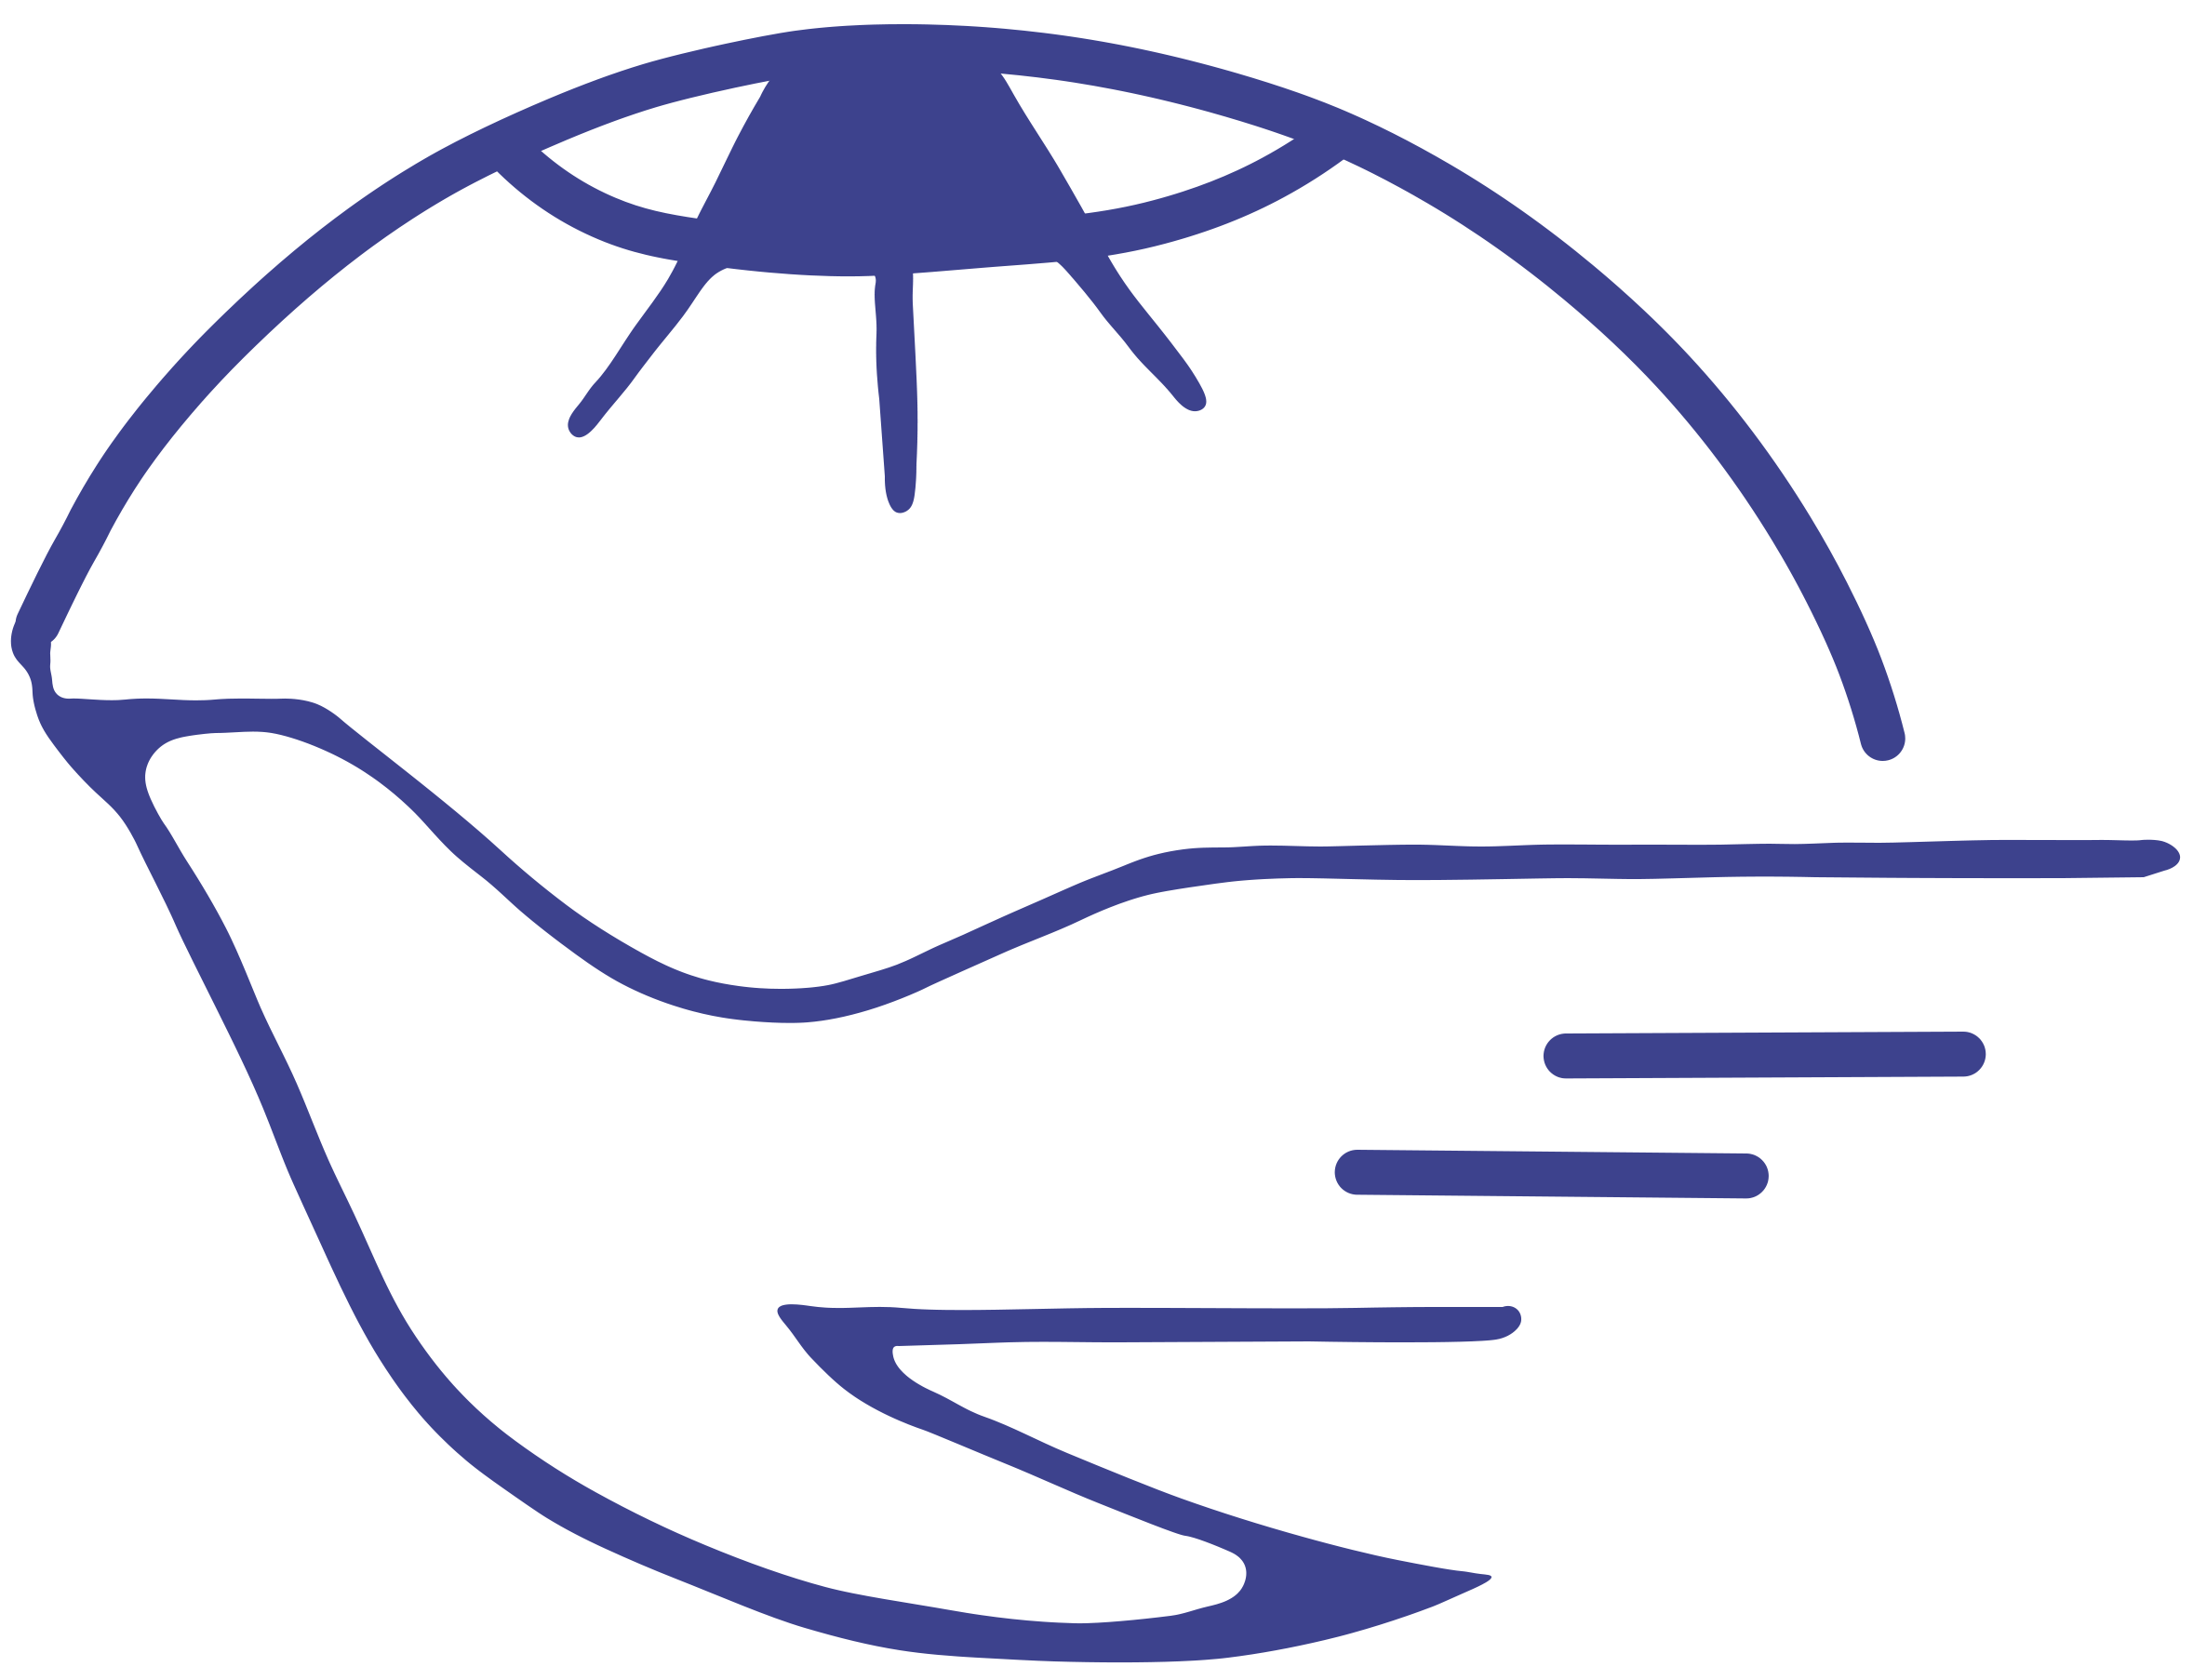 logo for iranderak agency in blue color